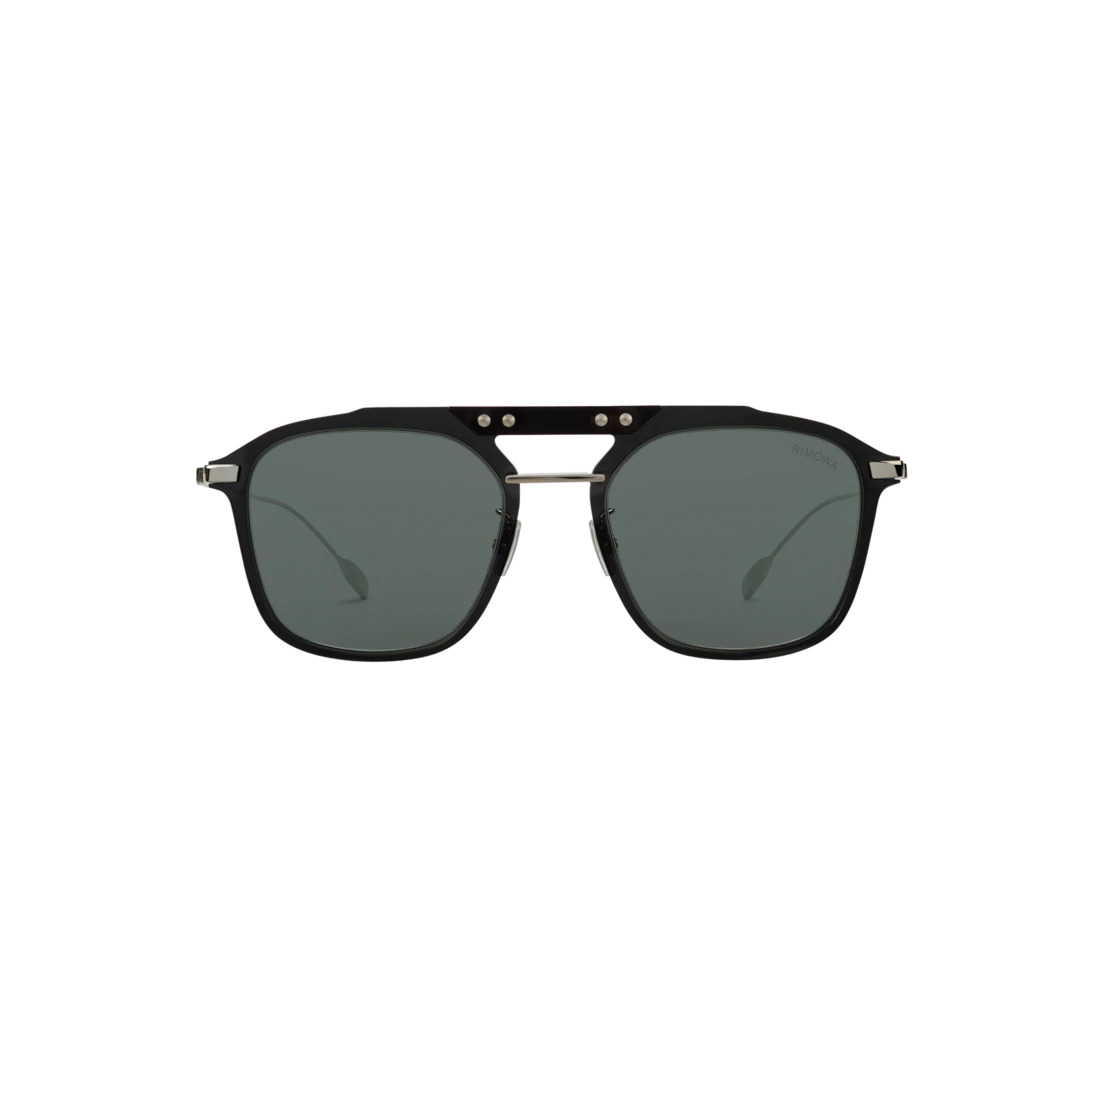 Eyewear Navigator Black Sunglasses - 1